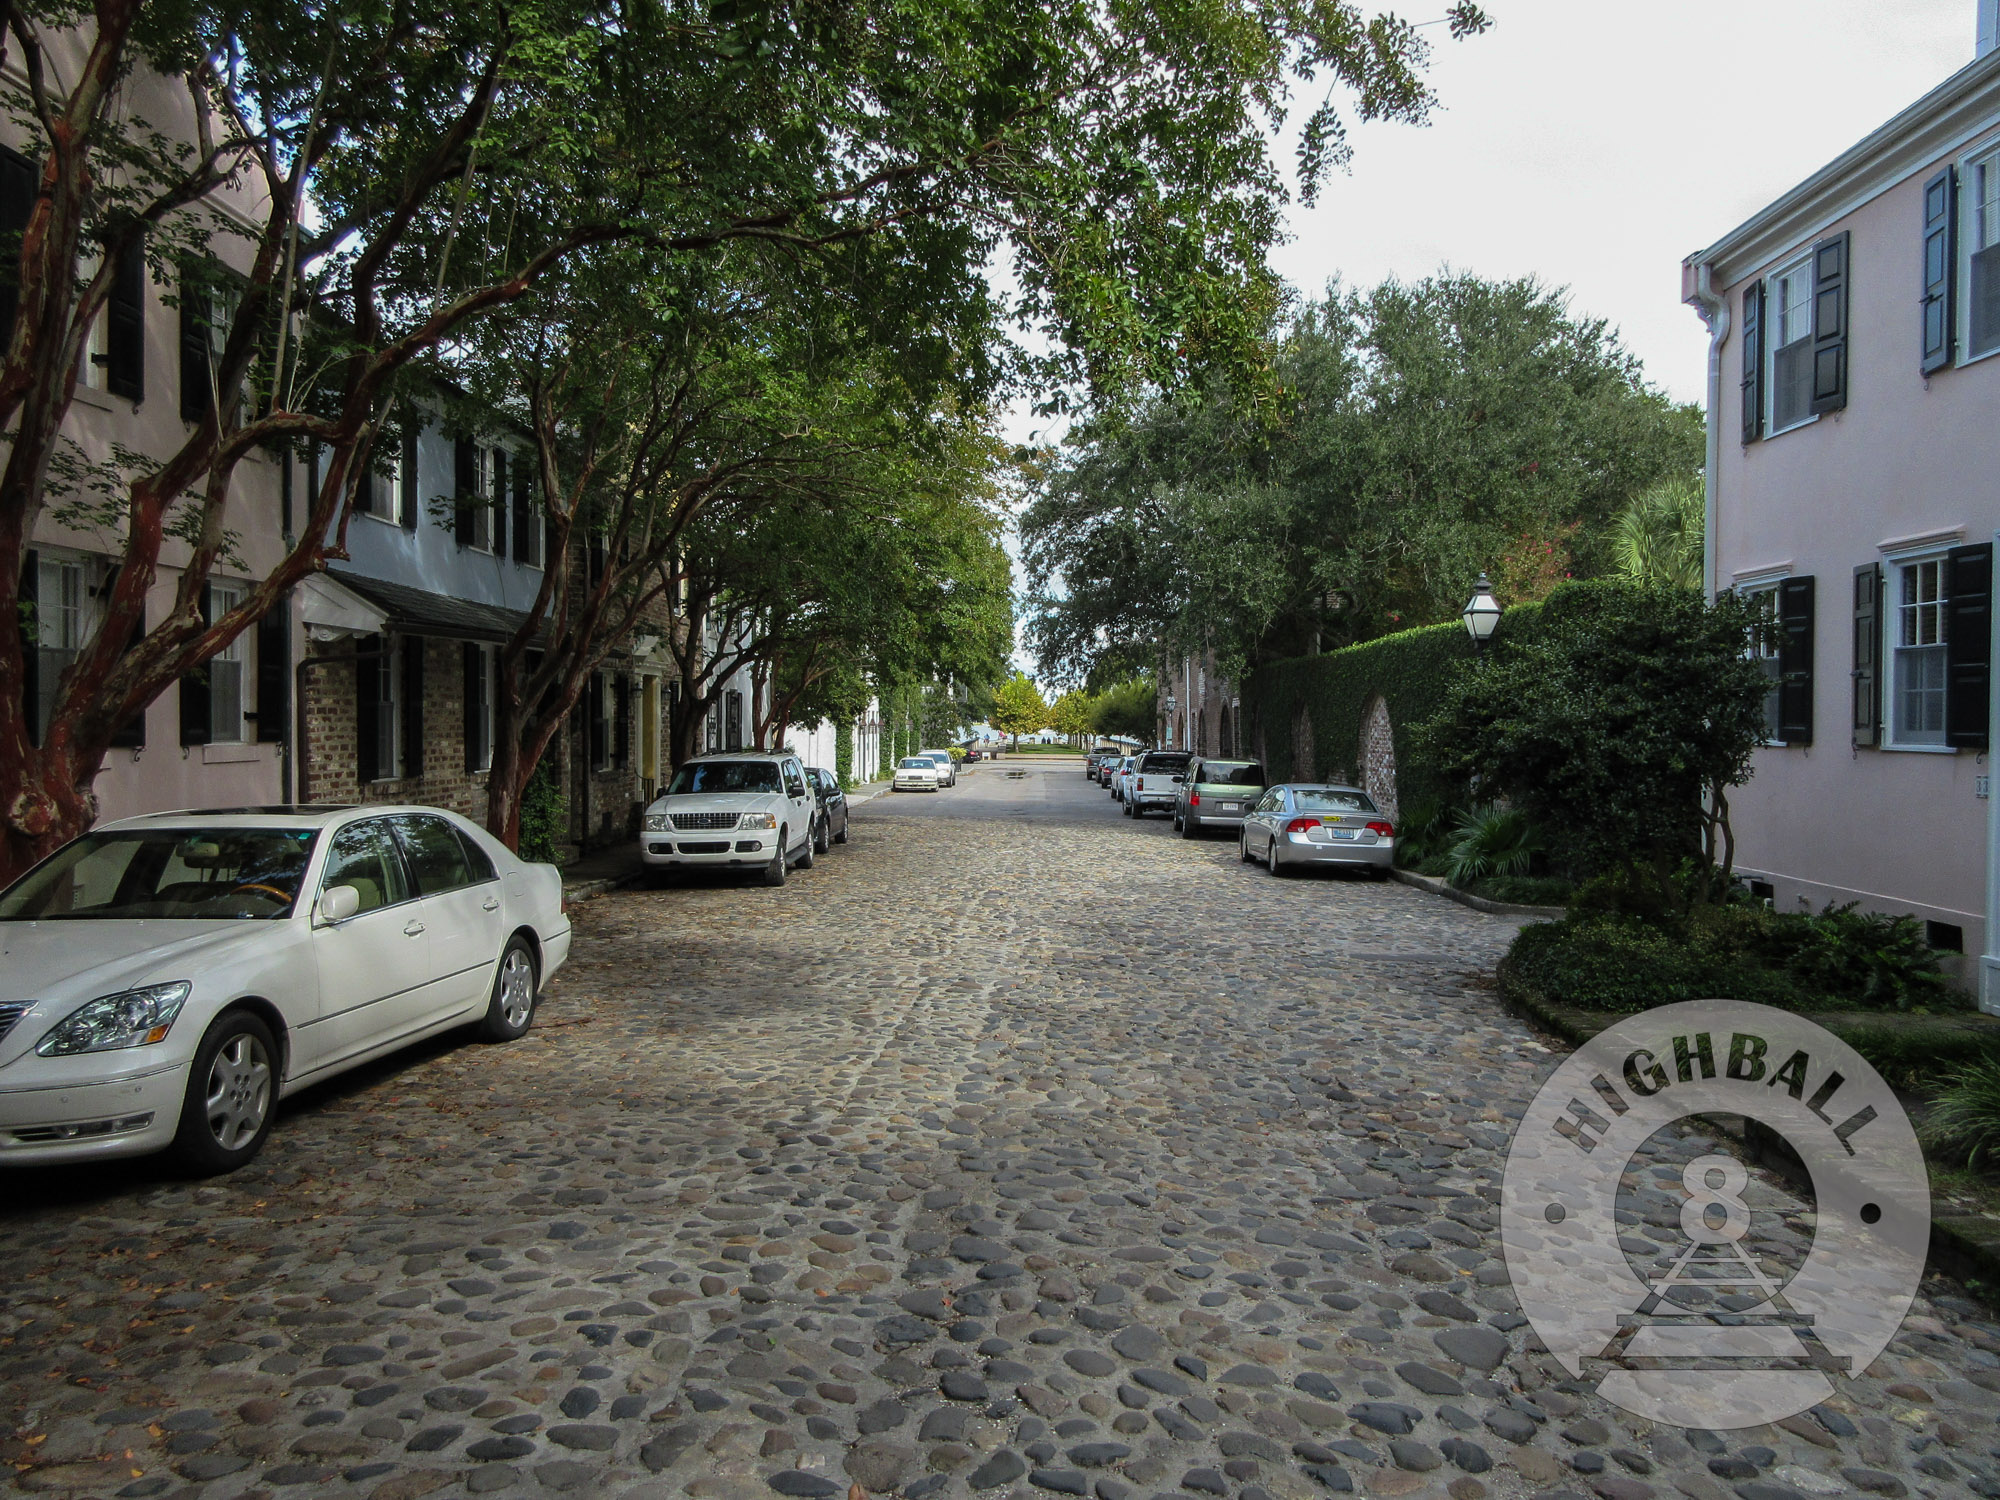 Street scene in the South of Broad neighborhood, Charleston, South Carolina, USA, 2015.